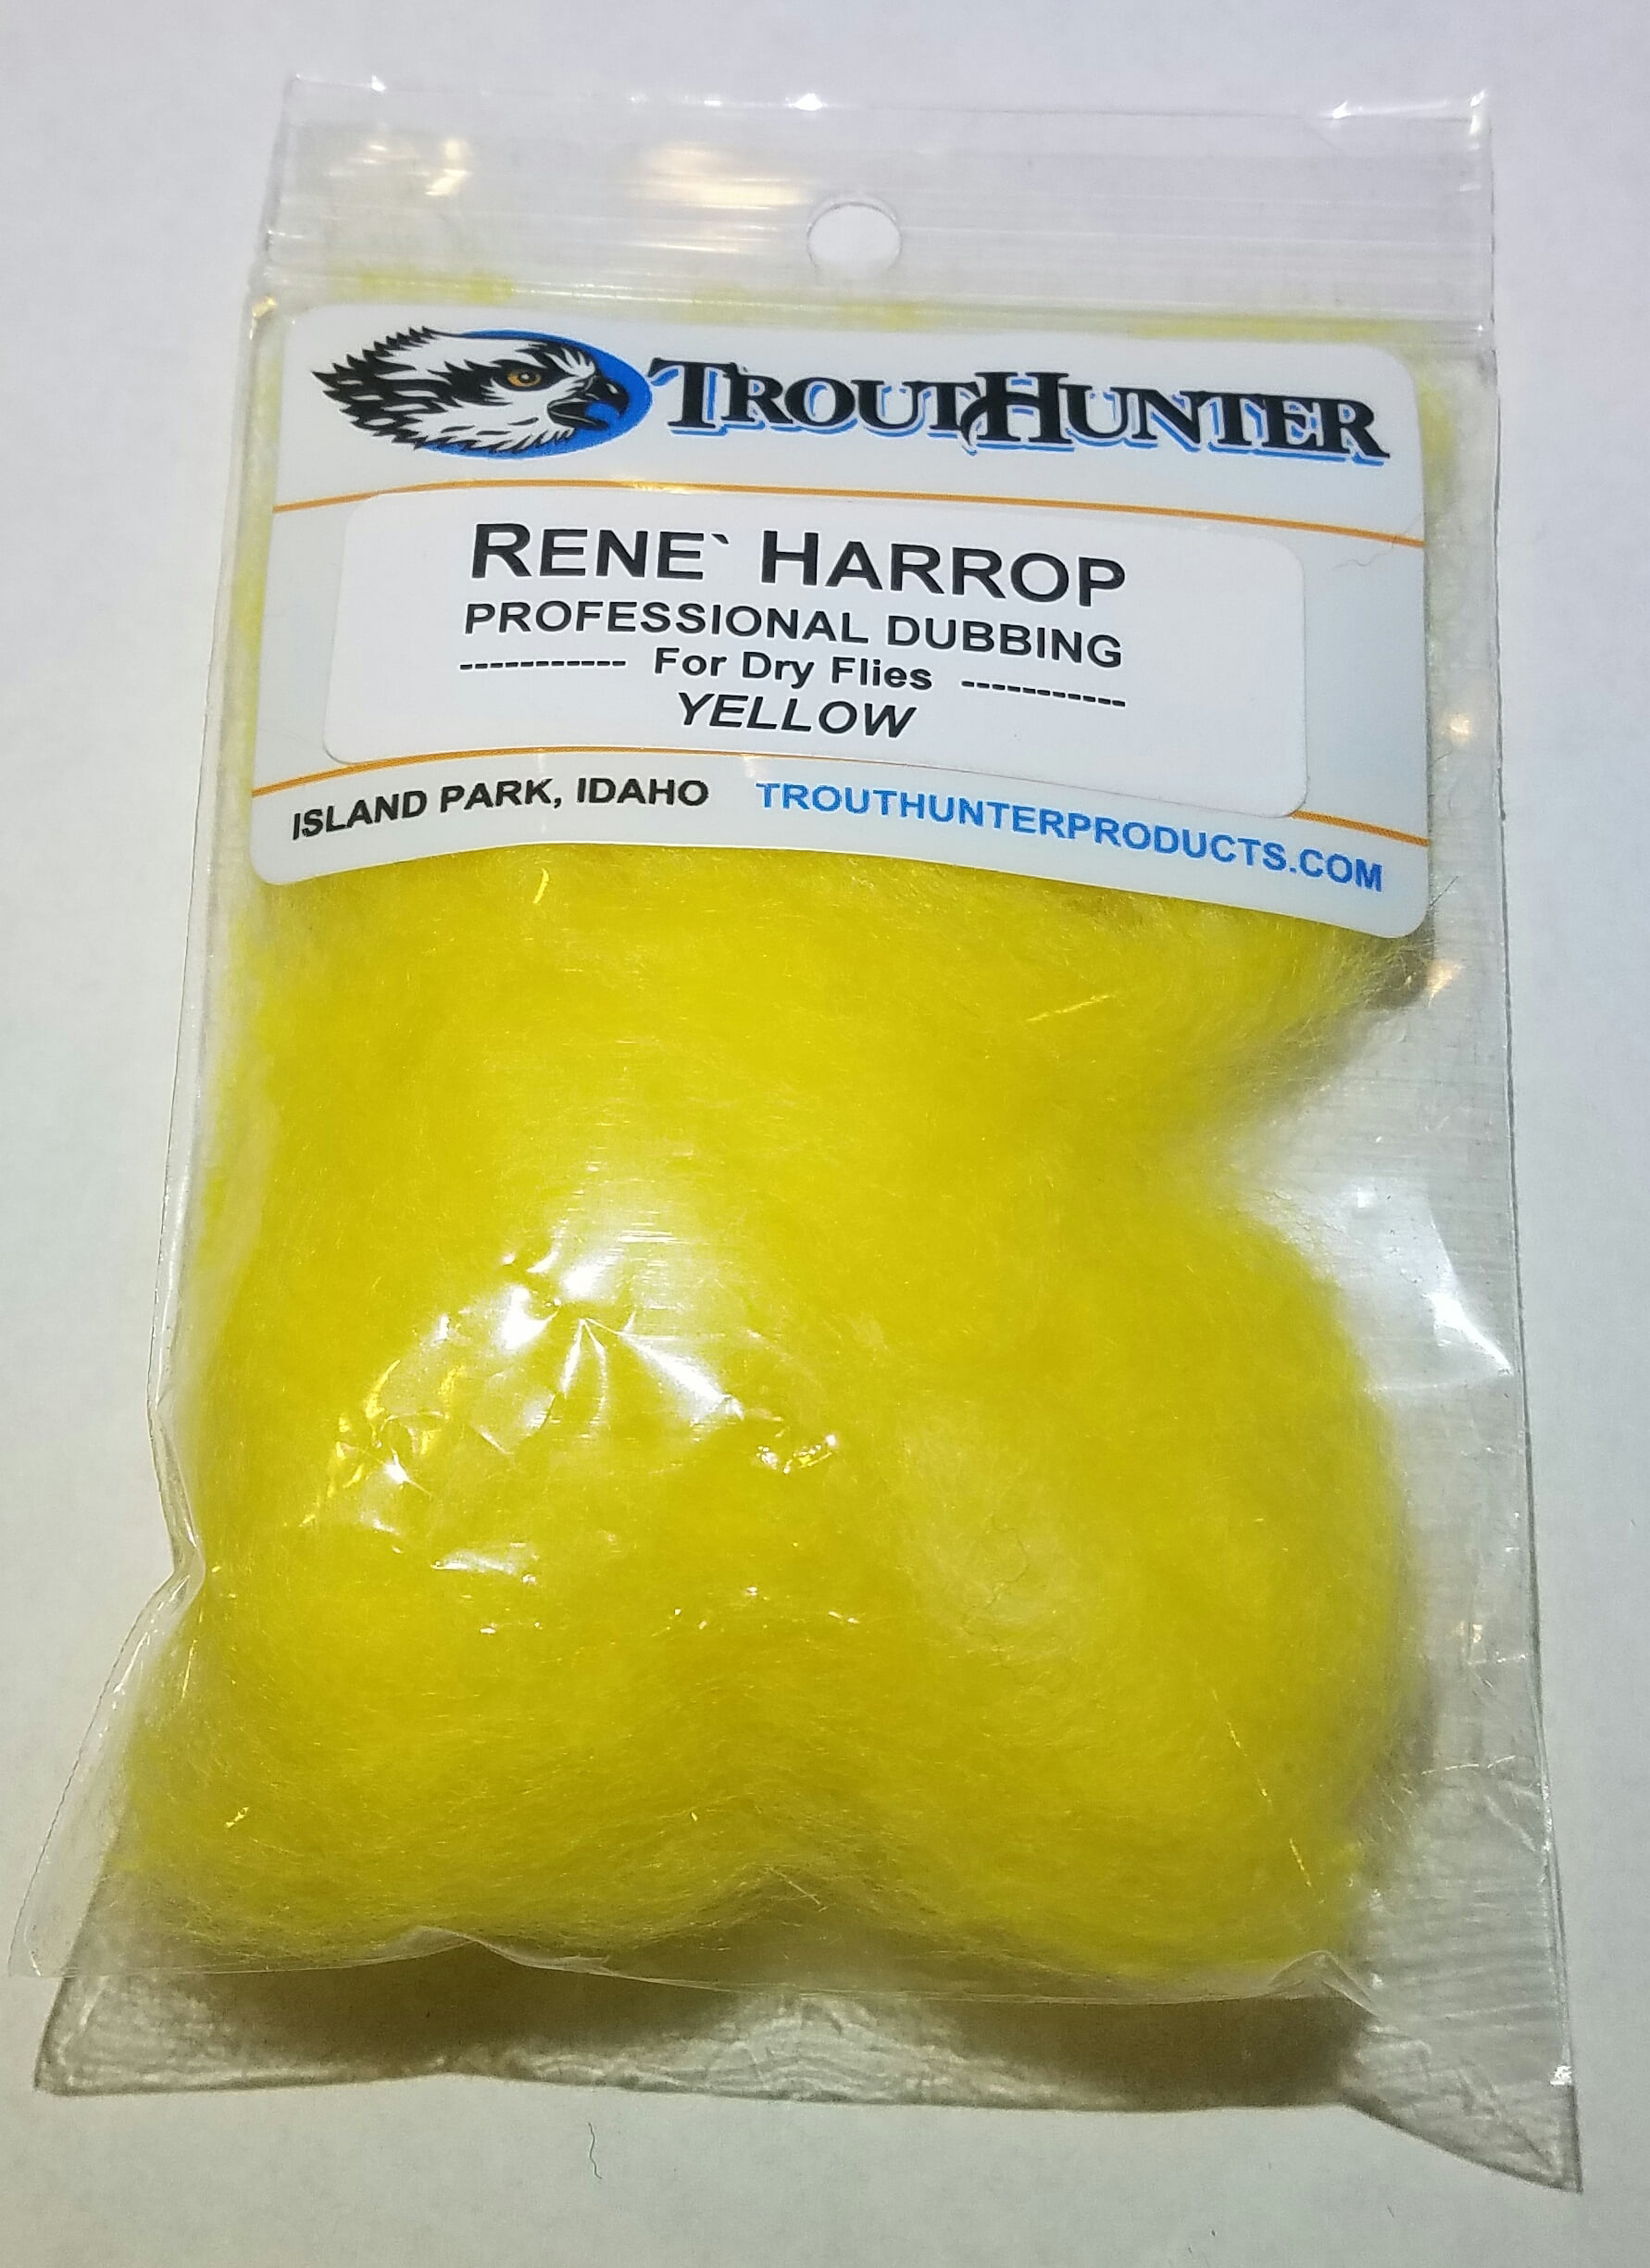 TroutHunter Rene Harrop Professional Dubbing for Dry Flies